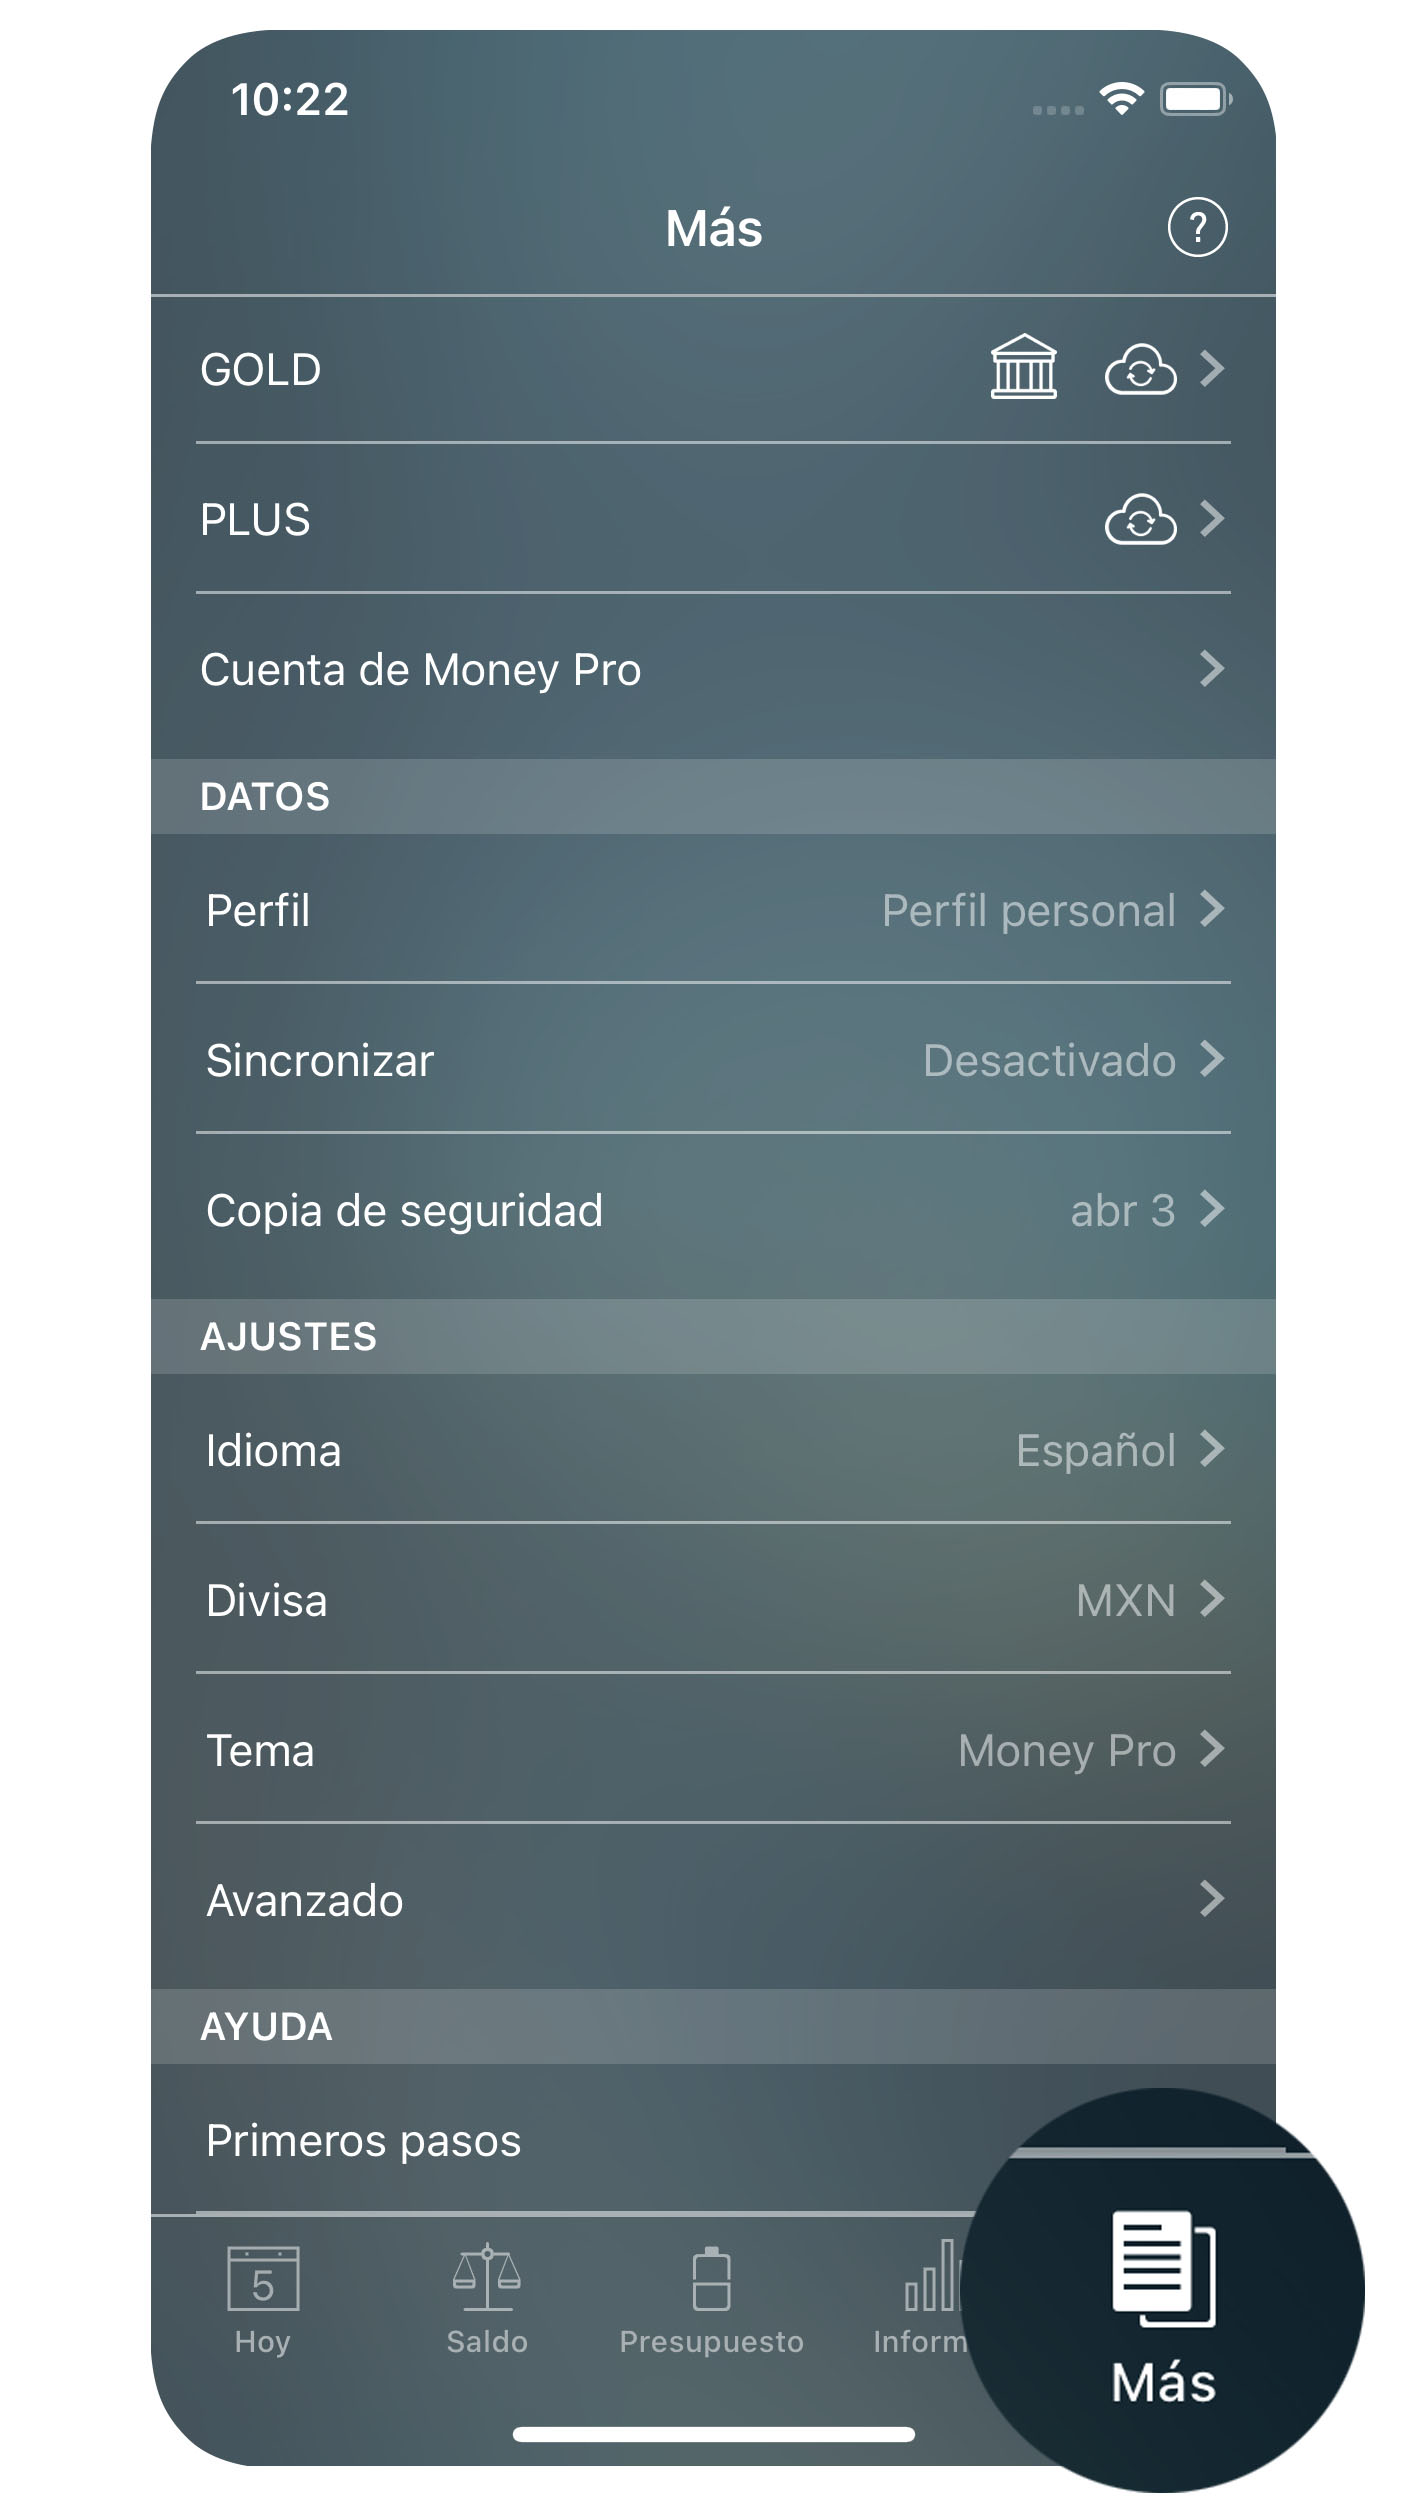 Money Pro - Mas (Backup, Perfiles, Sincronizar) - iPhone